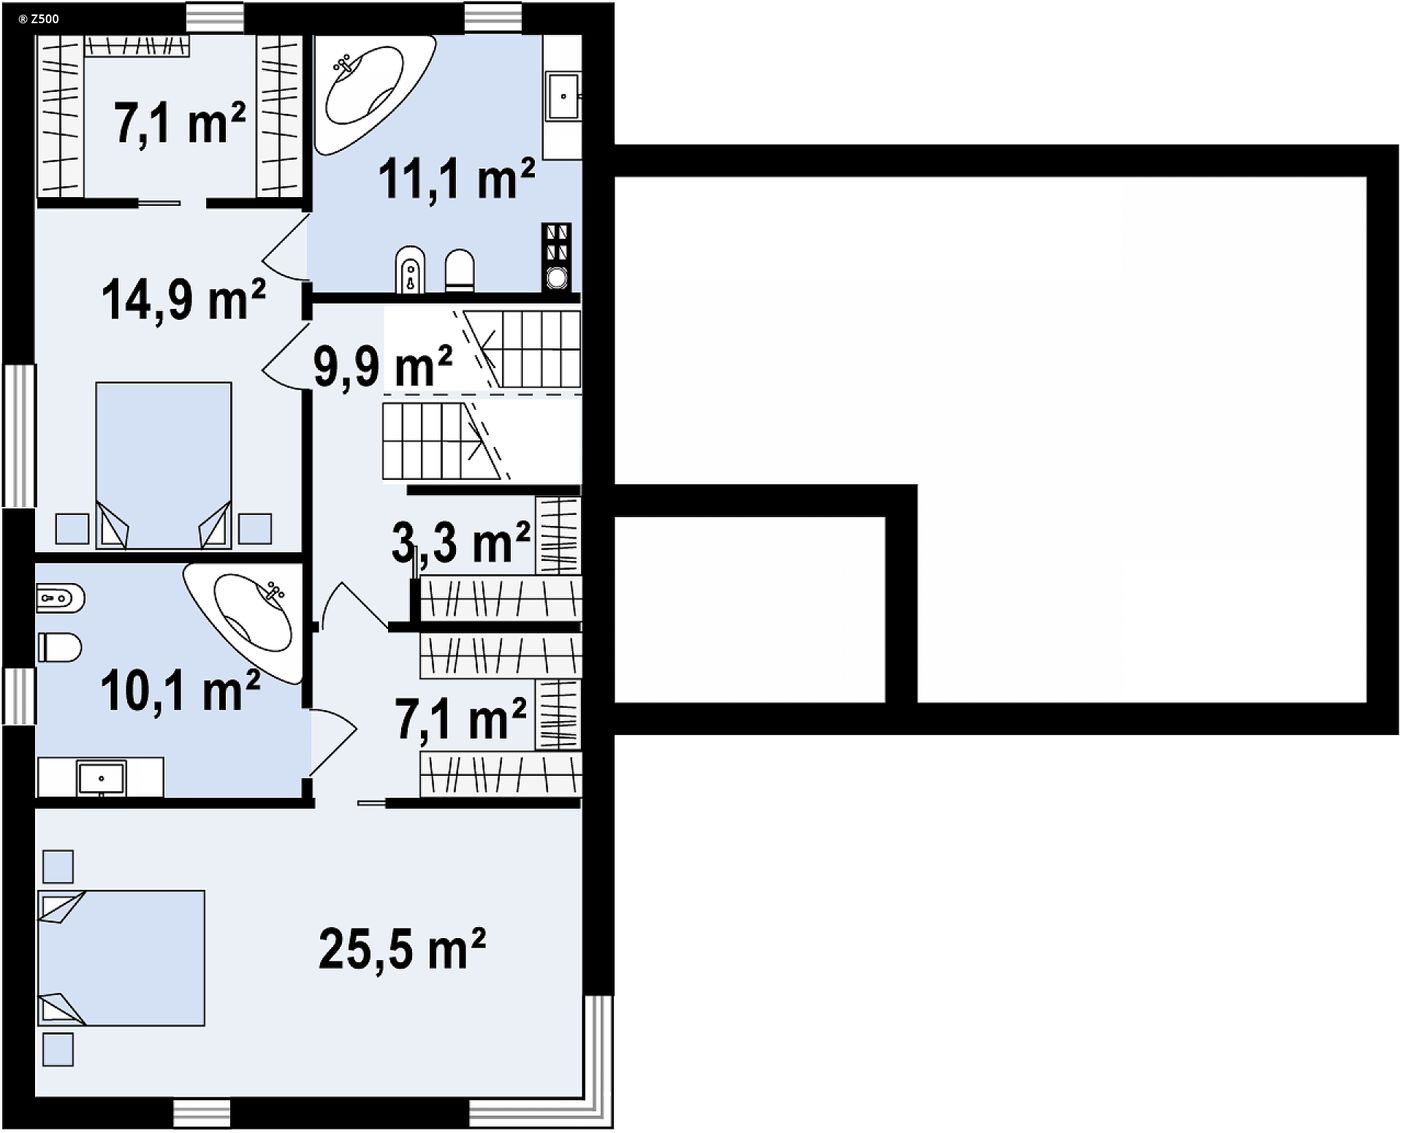 2-ой этаж - план проекта Zx190